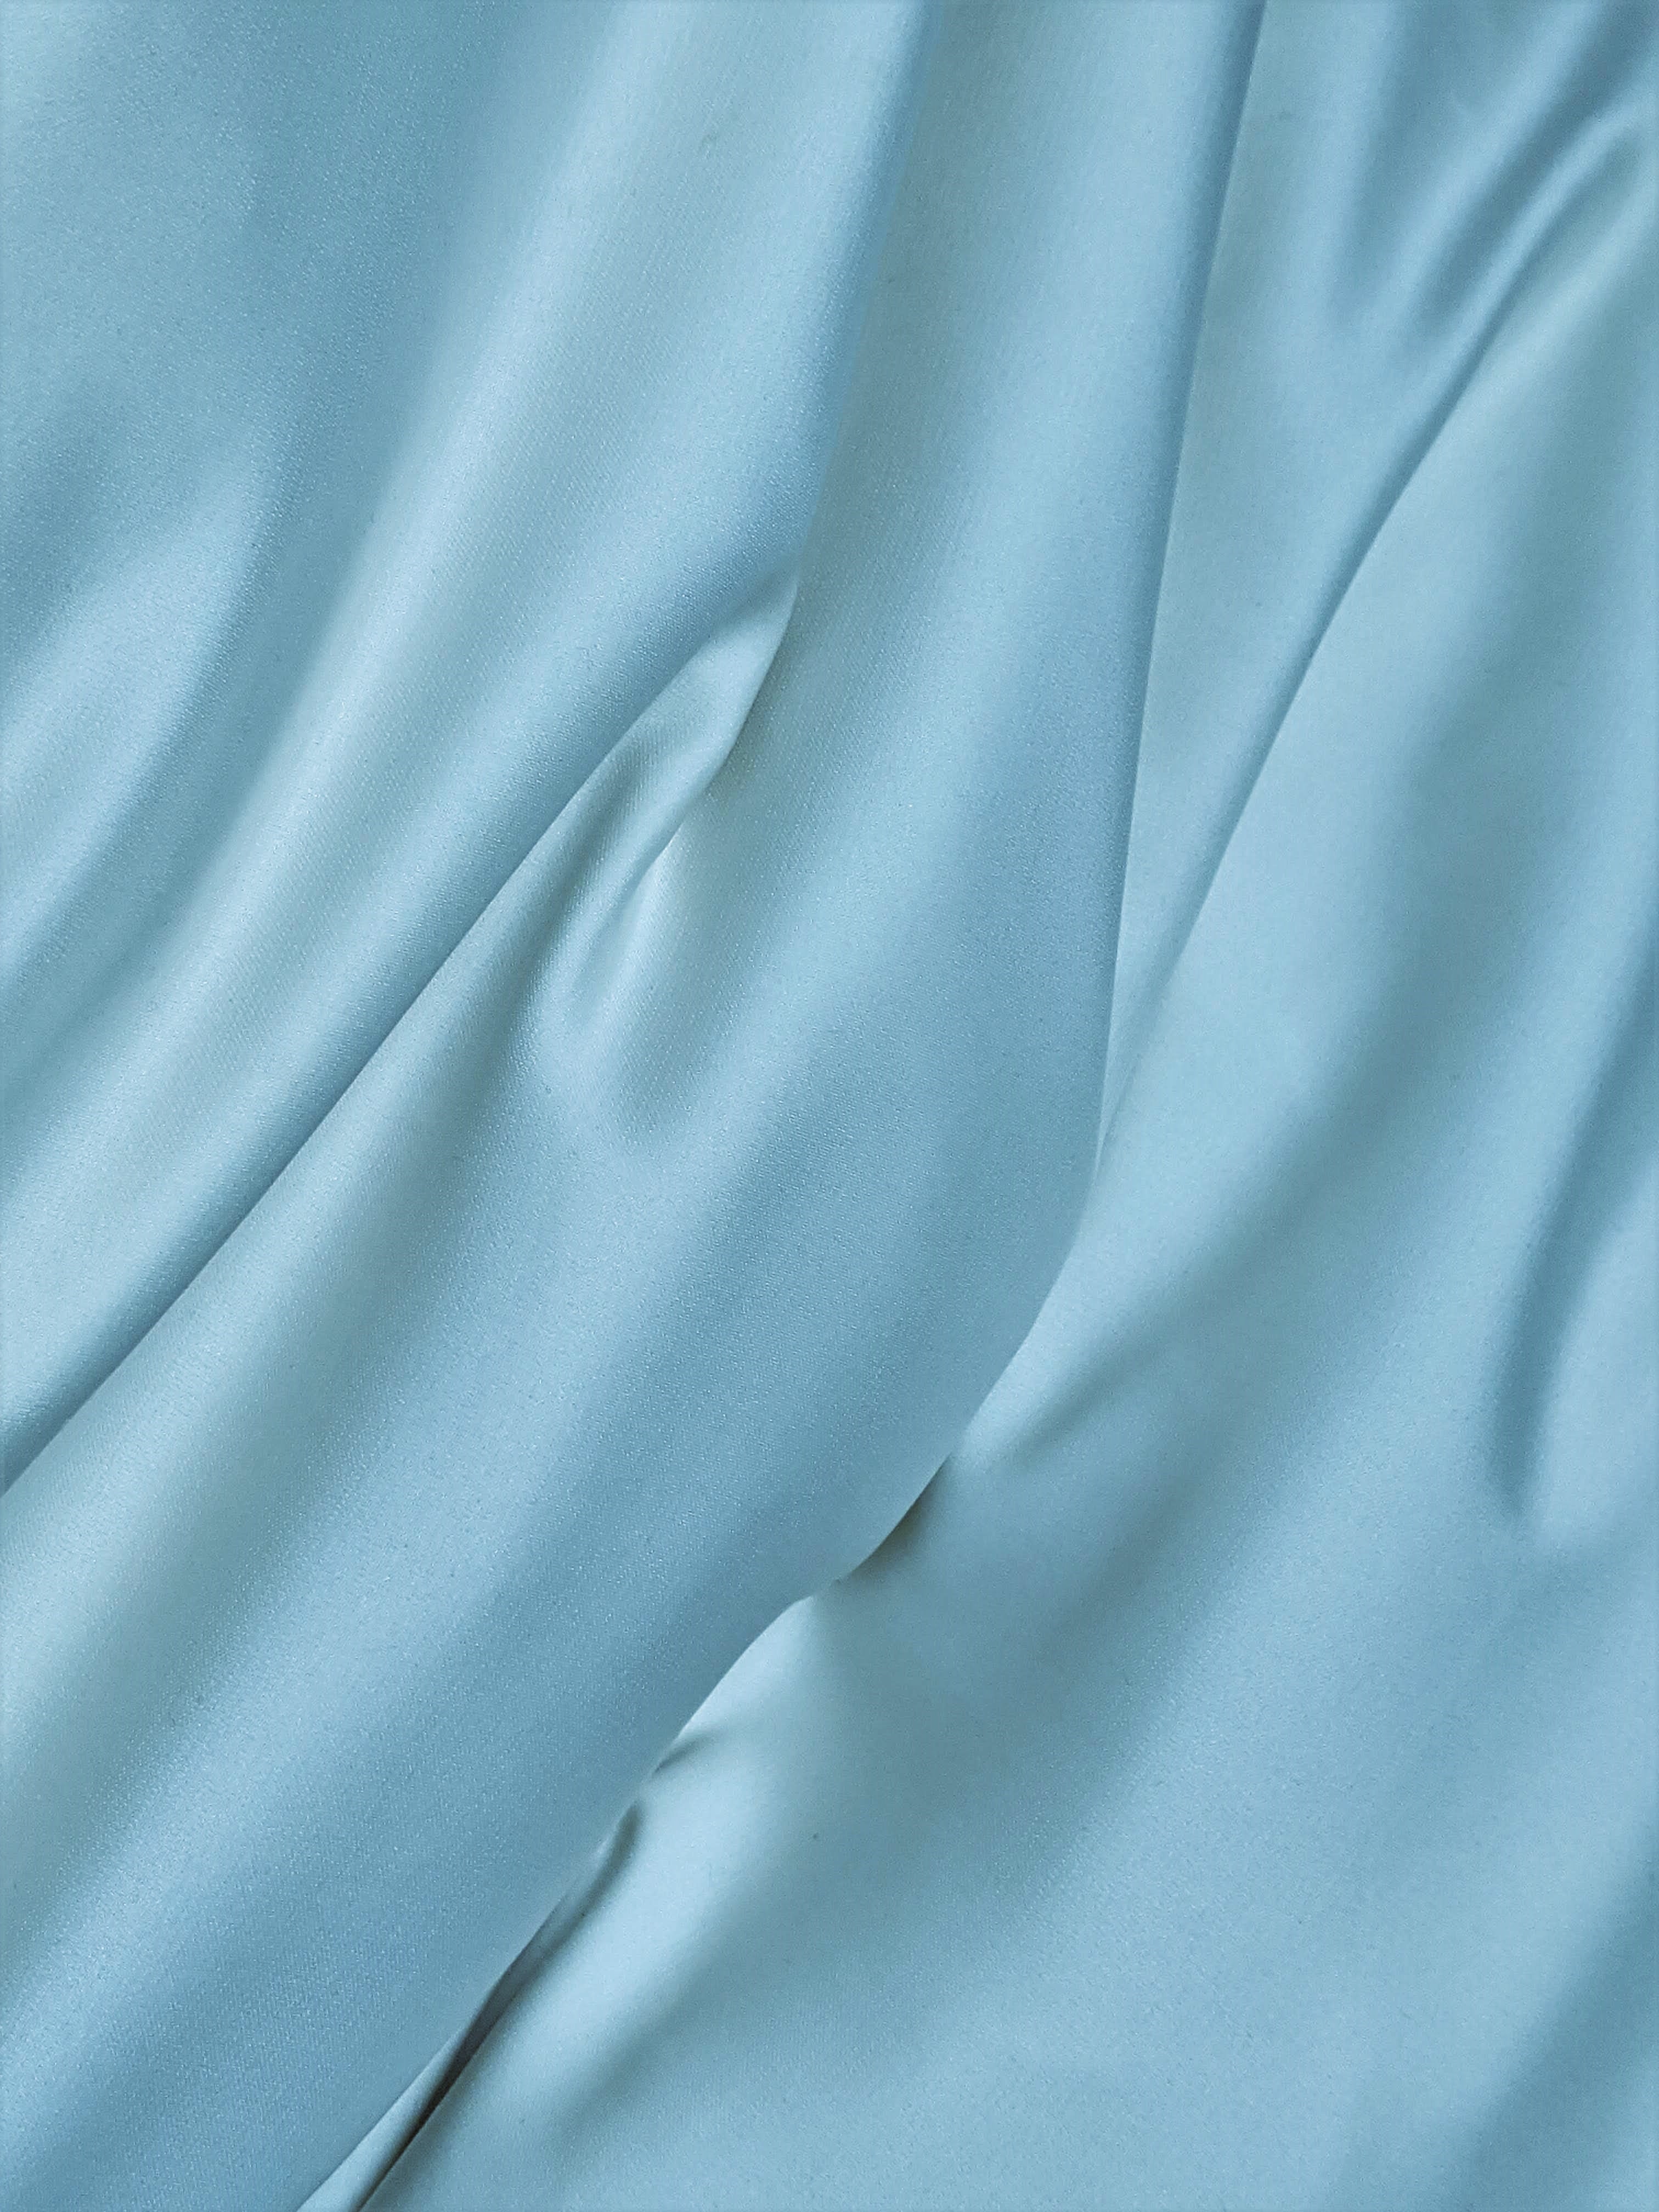 textures, blue, texture, cloth, folds, pleating, silk